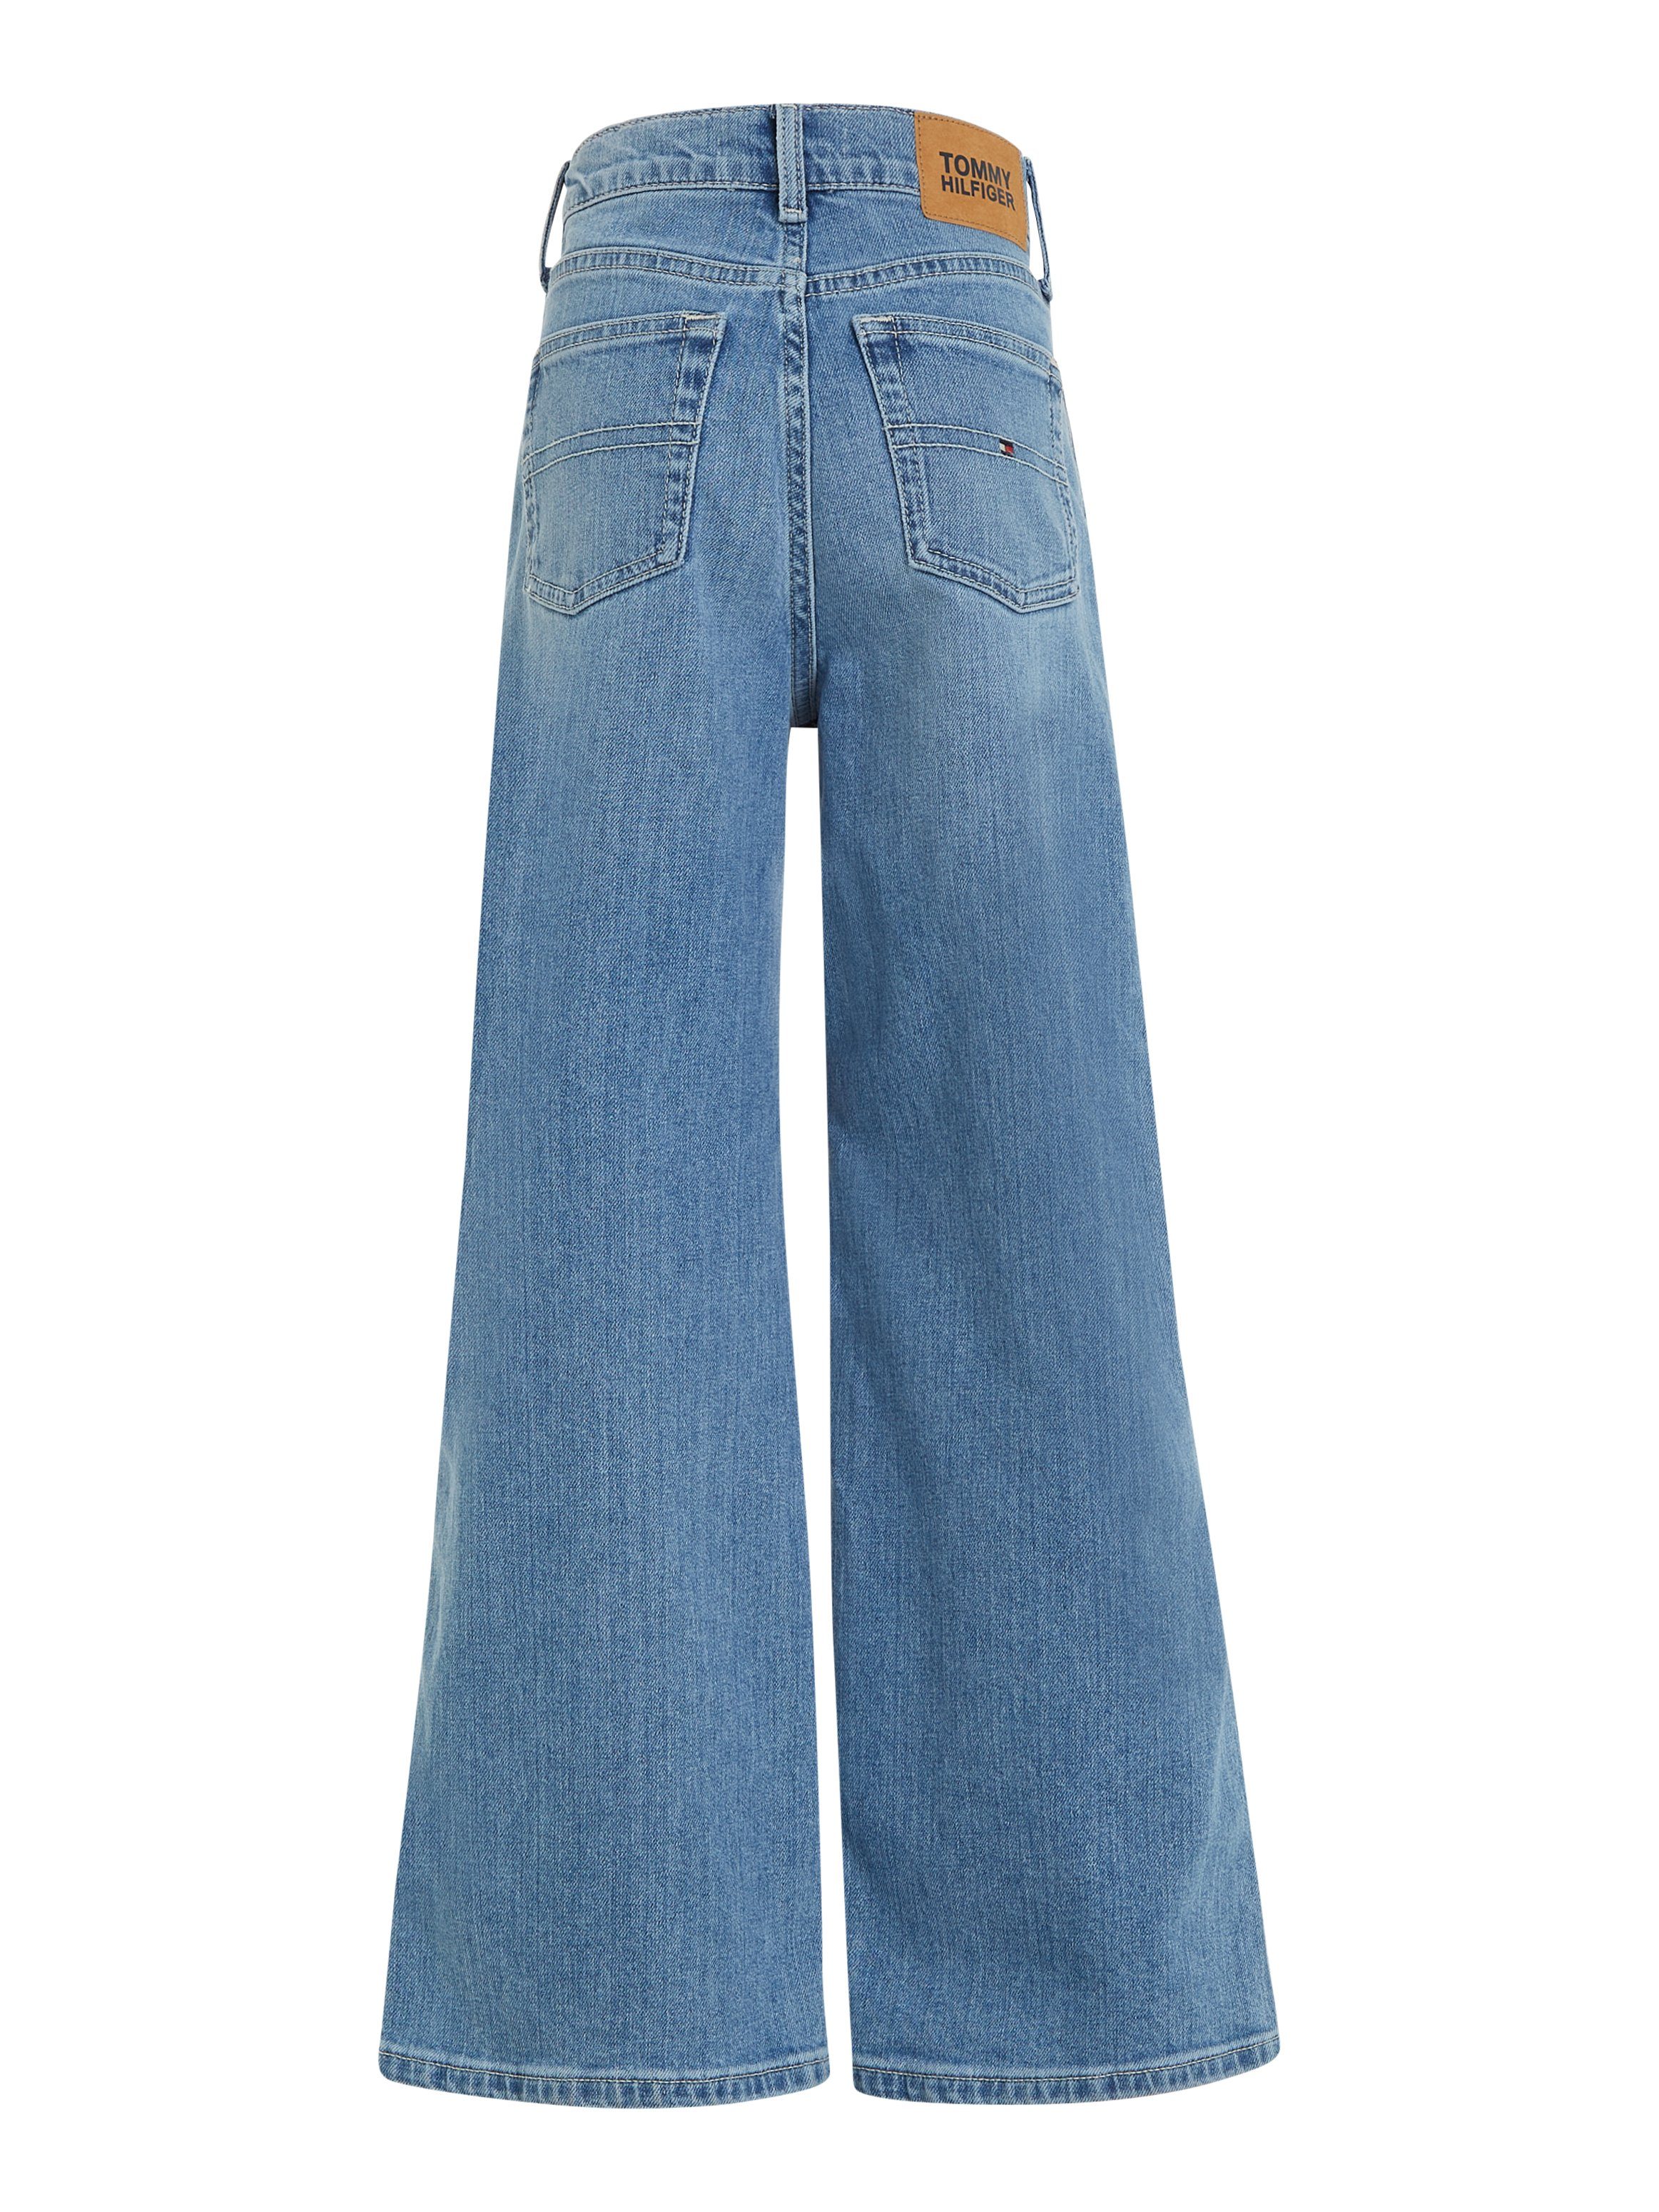 Hilfiger Jeans im Weite 5-Pocket-Style WASH Tommy MABEL MID